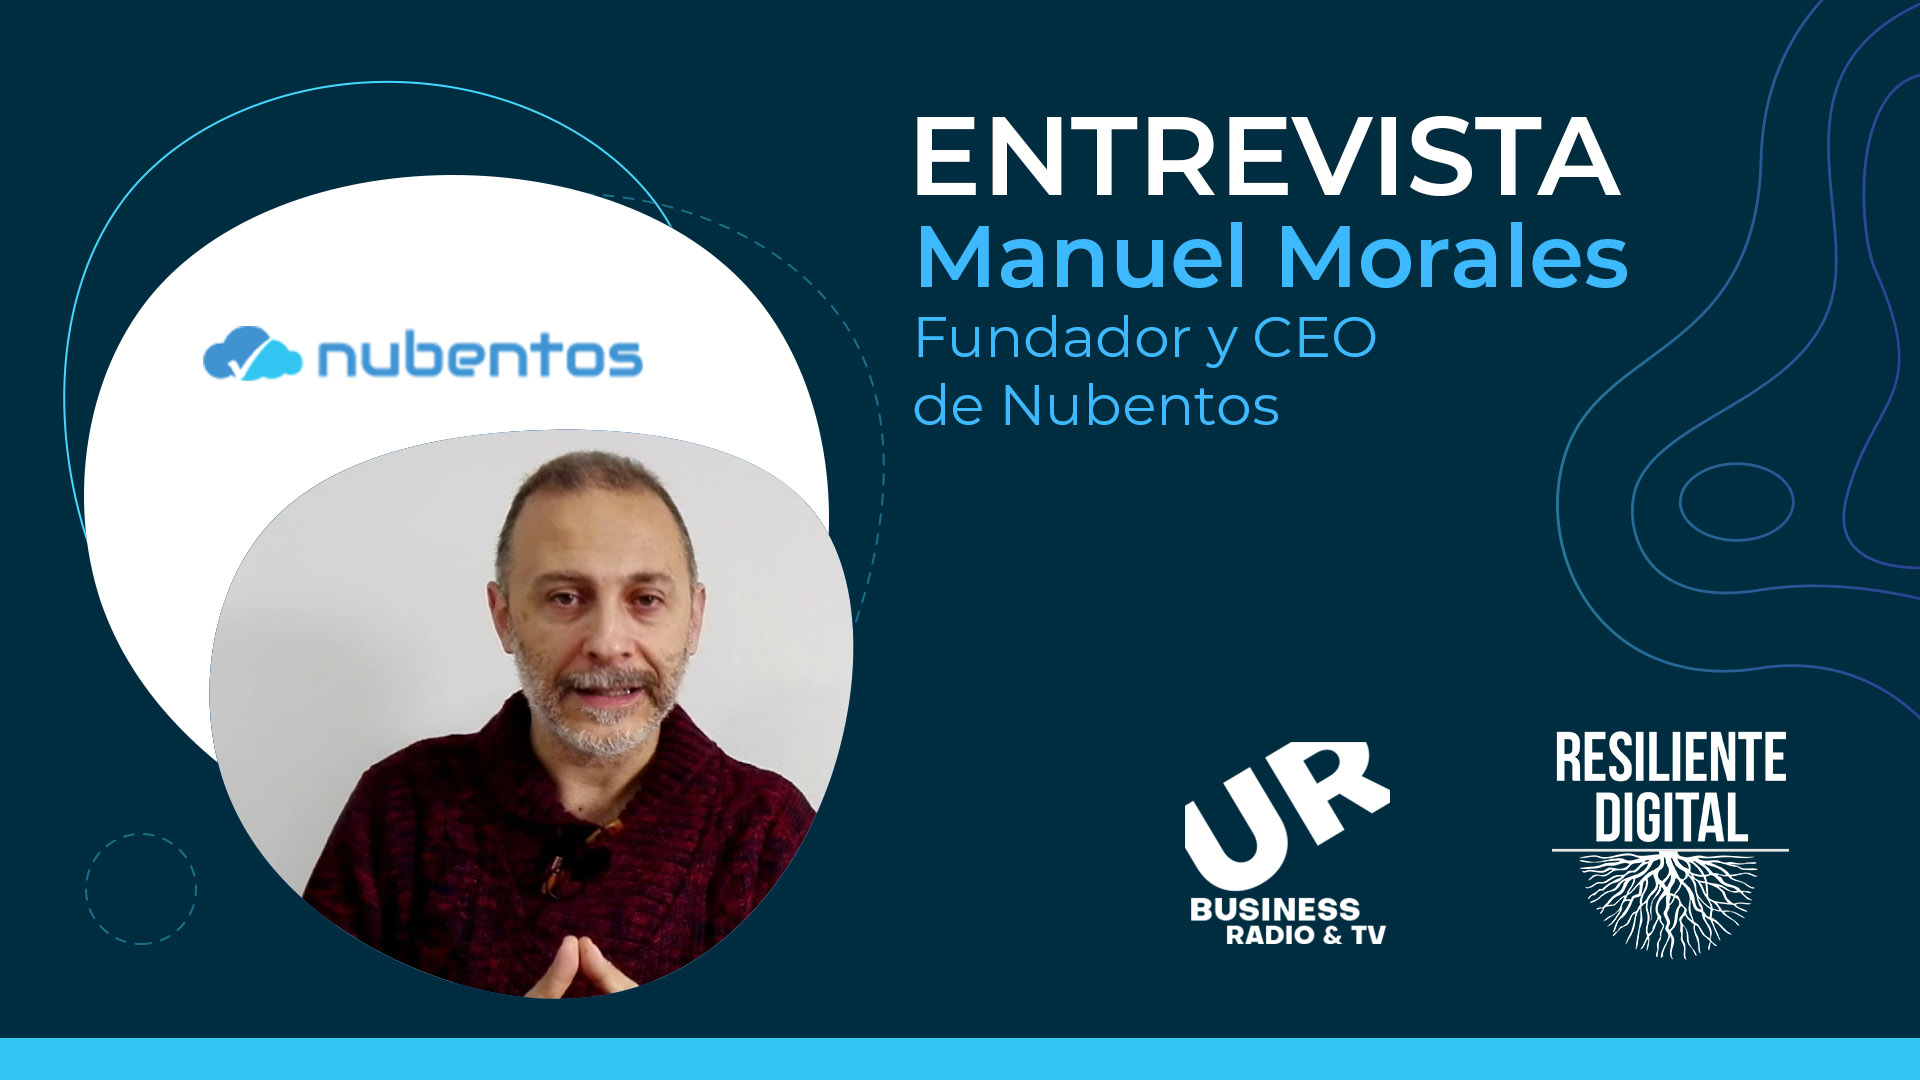 Manuel morales